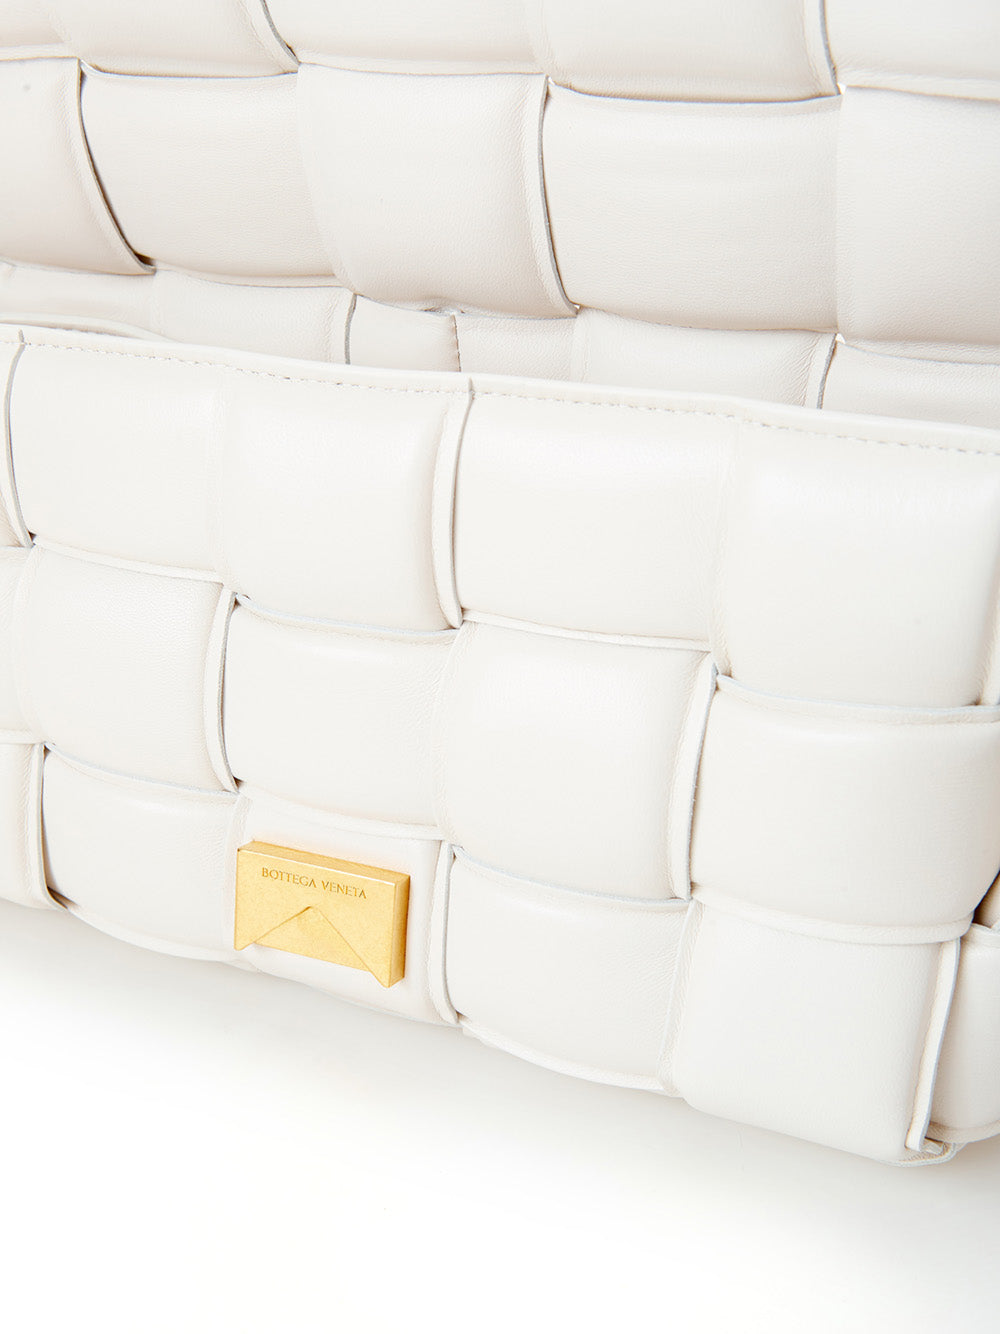 Elegant Padded White Leather Crossbody Bag